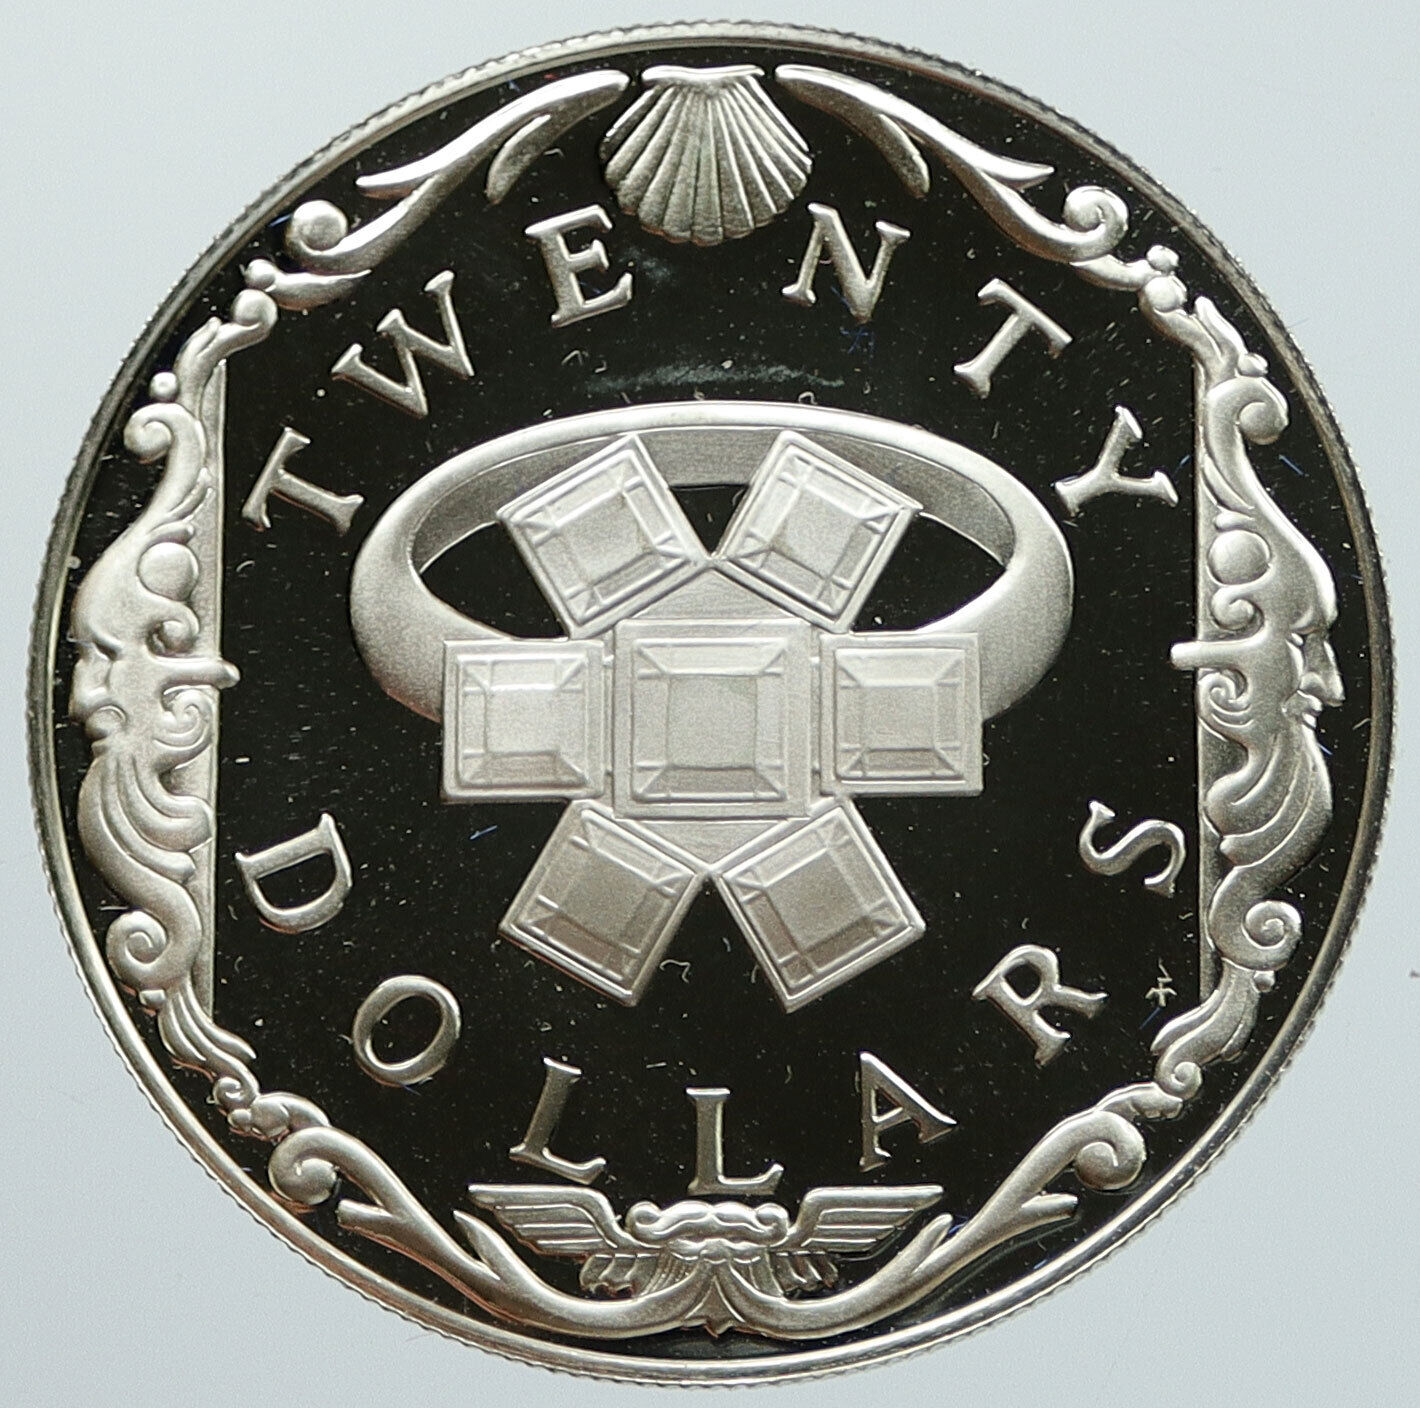 1985 British Virgin Islands Ship Treasure Ring OLD Proof Silver $20 Coin i116860